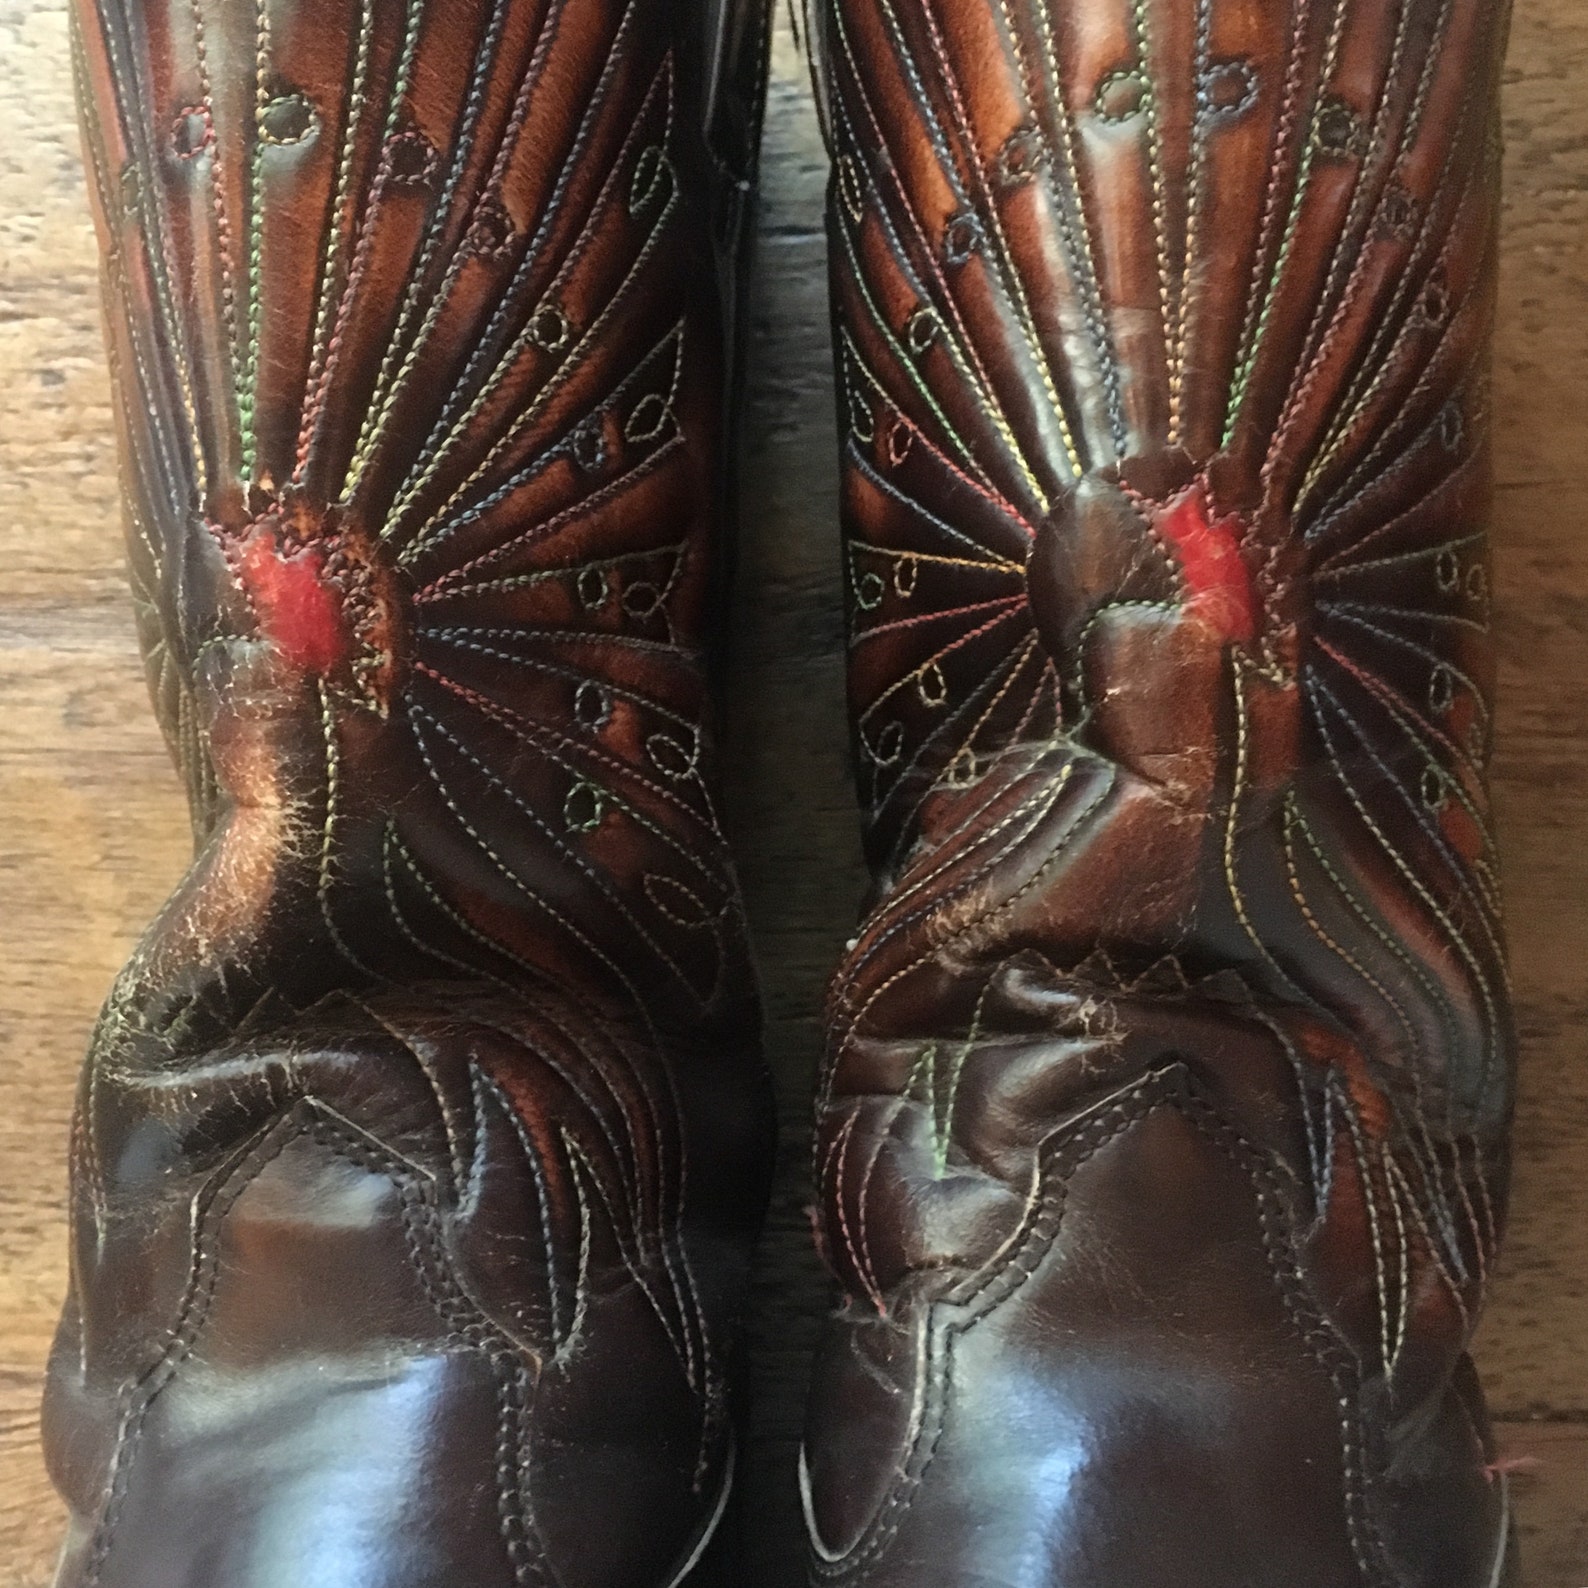 Rare Men's Cowboy Boots w/ PEACOCK INLAY | Etsy